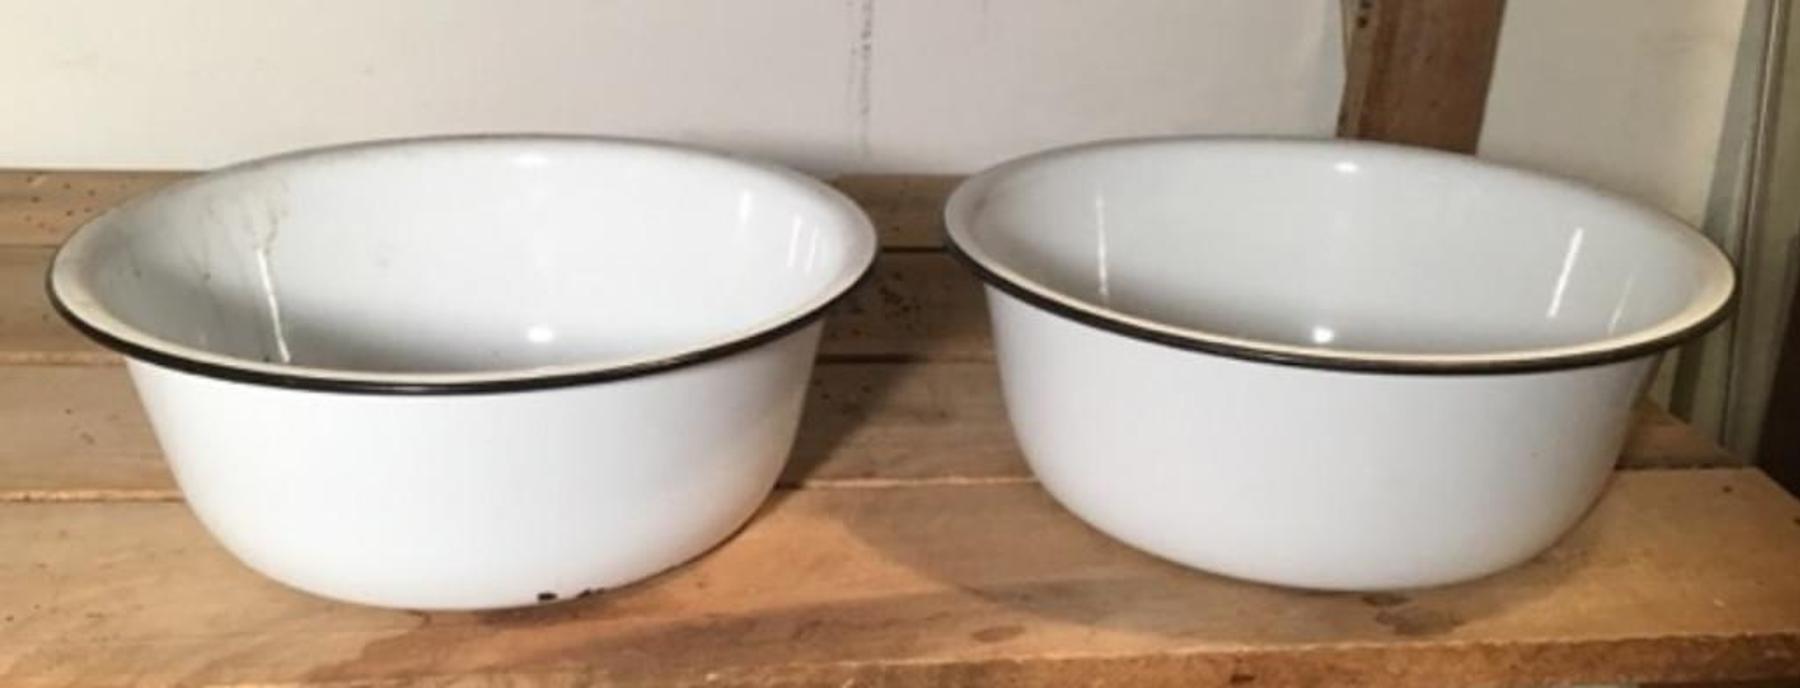 Image for Pair Of White Enamel Dish Pans